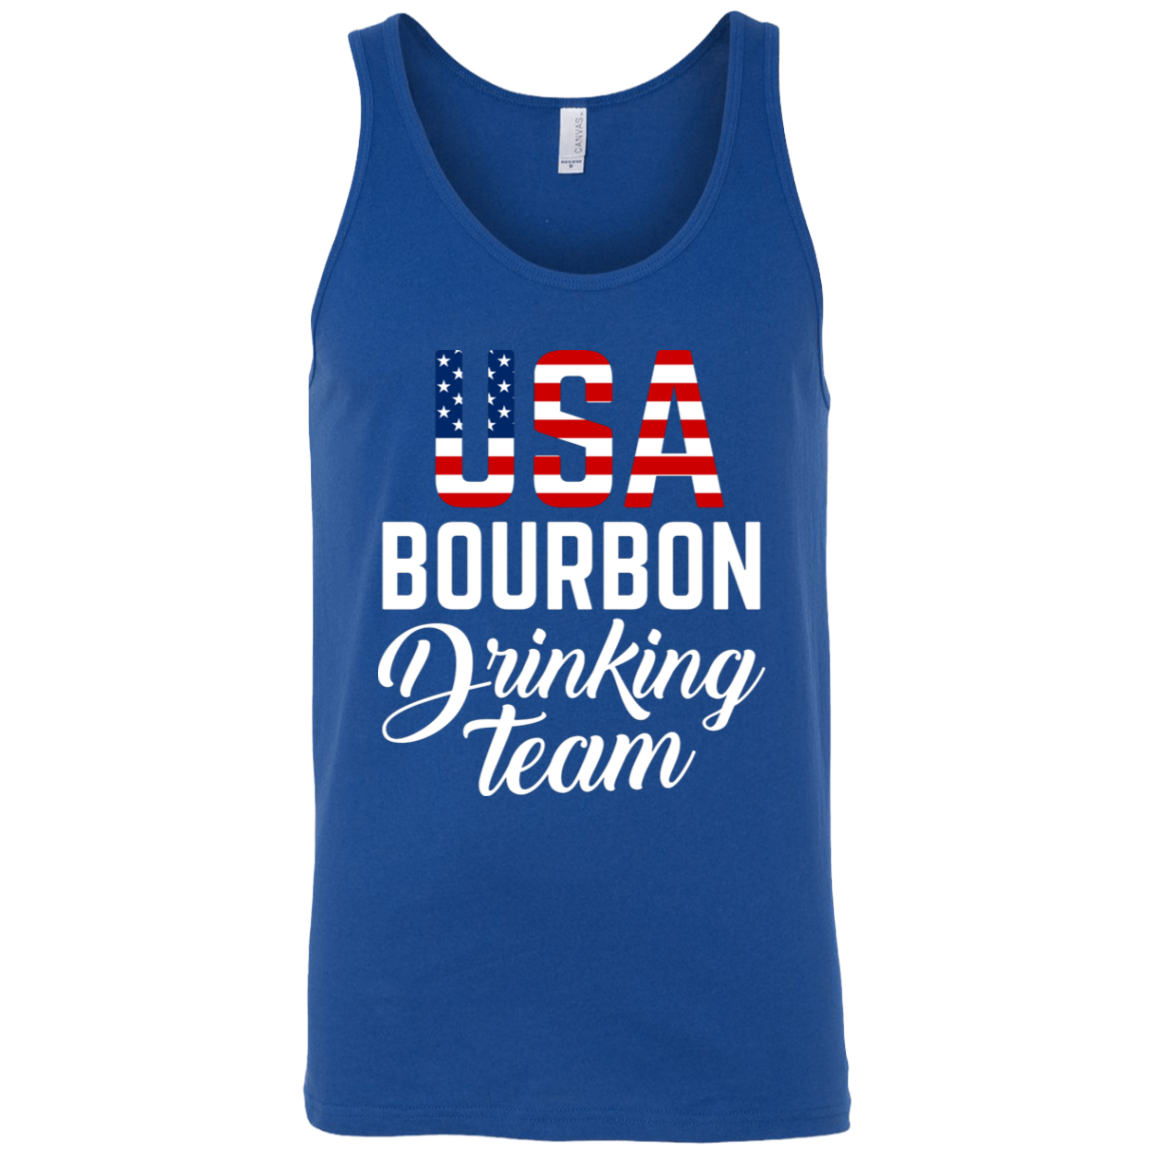 USA Bourbon Drinking Team Tank Top Apparel - The Beer Lodge